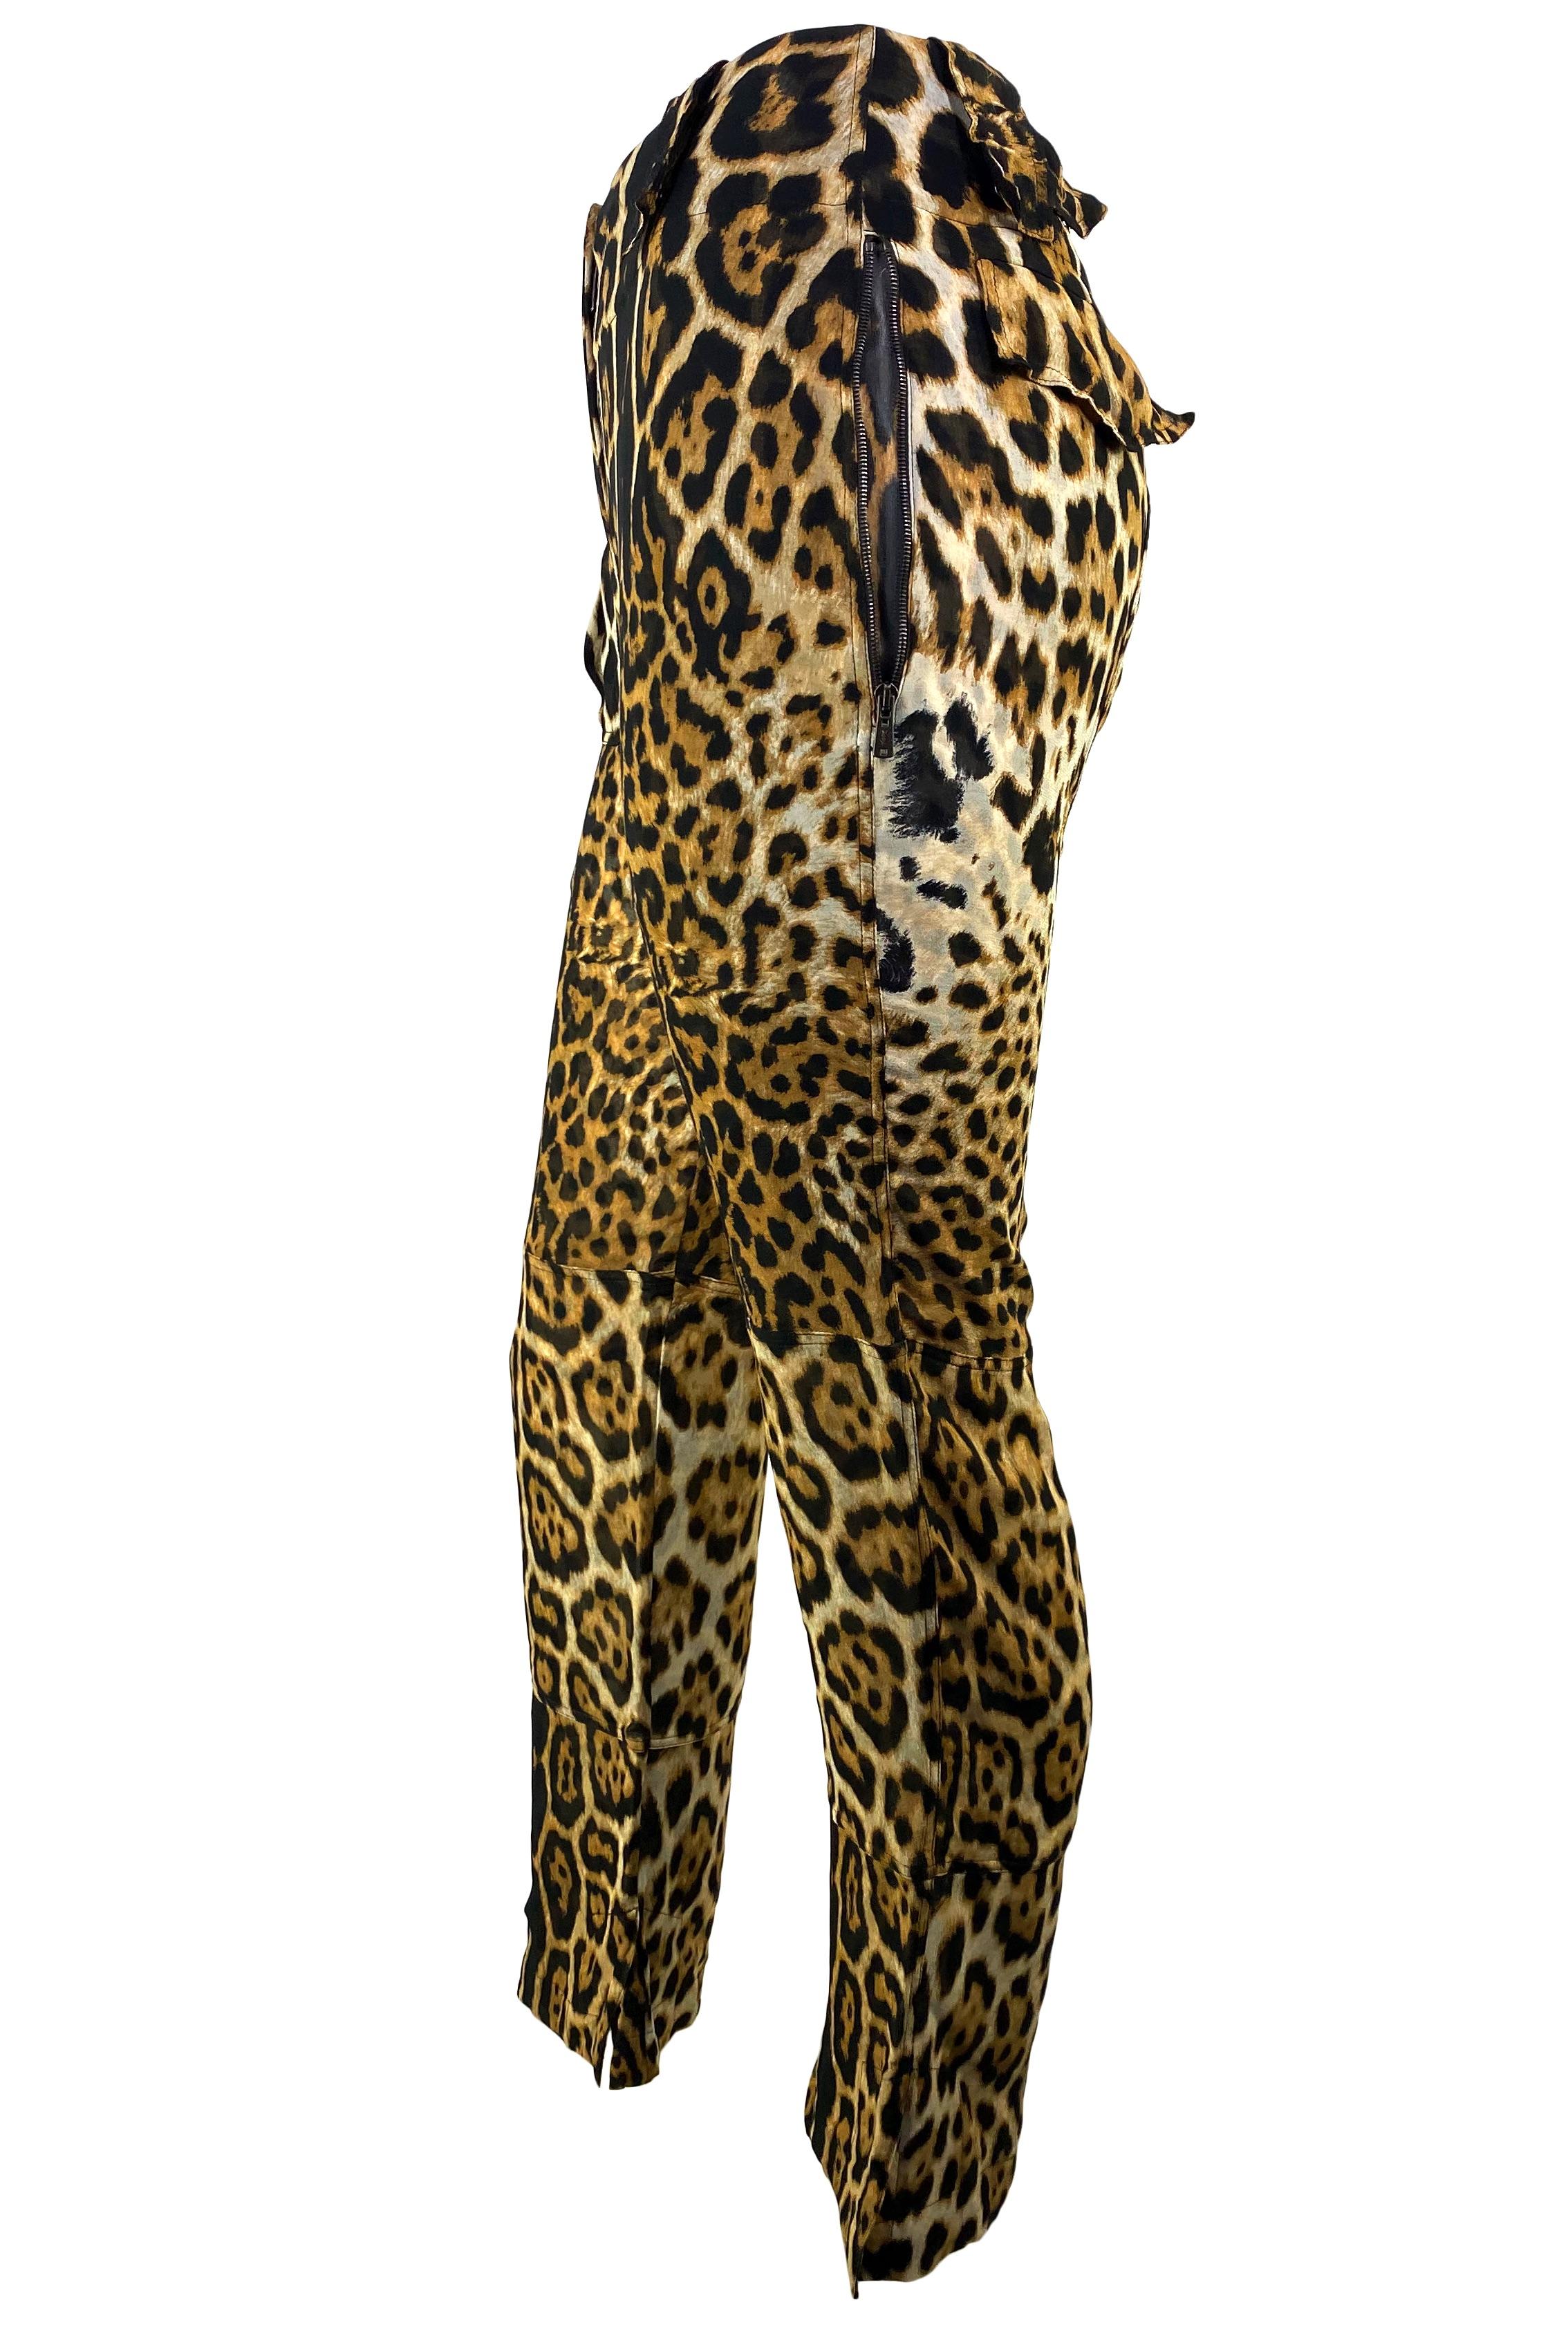 tom ford leopard pants